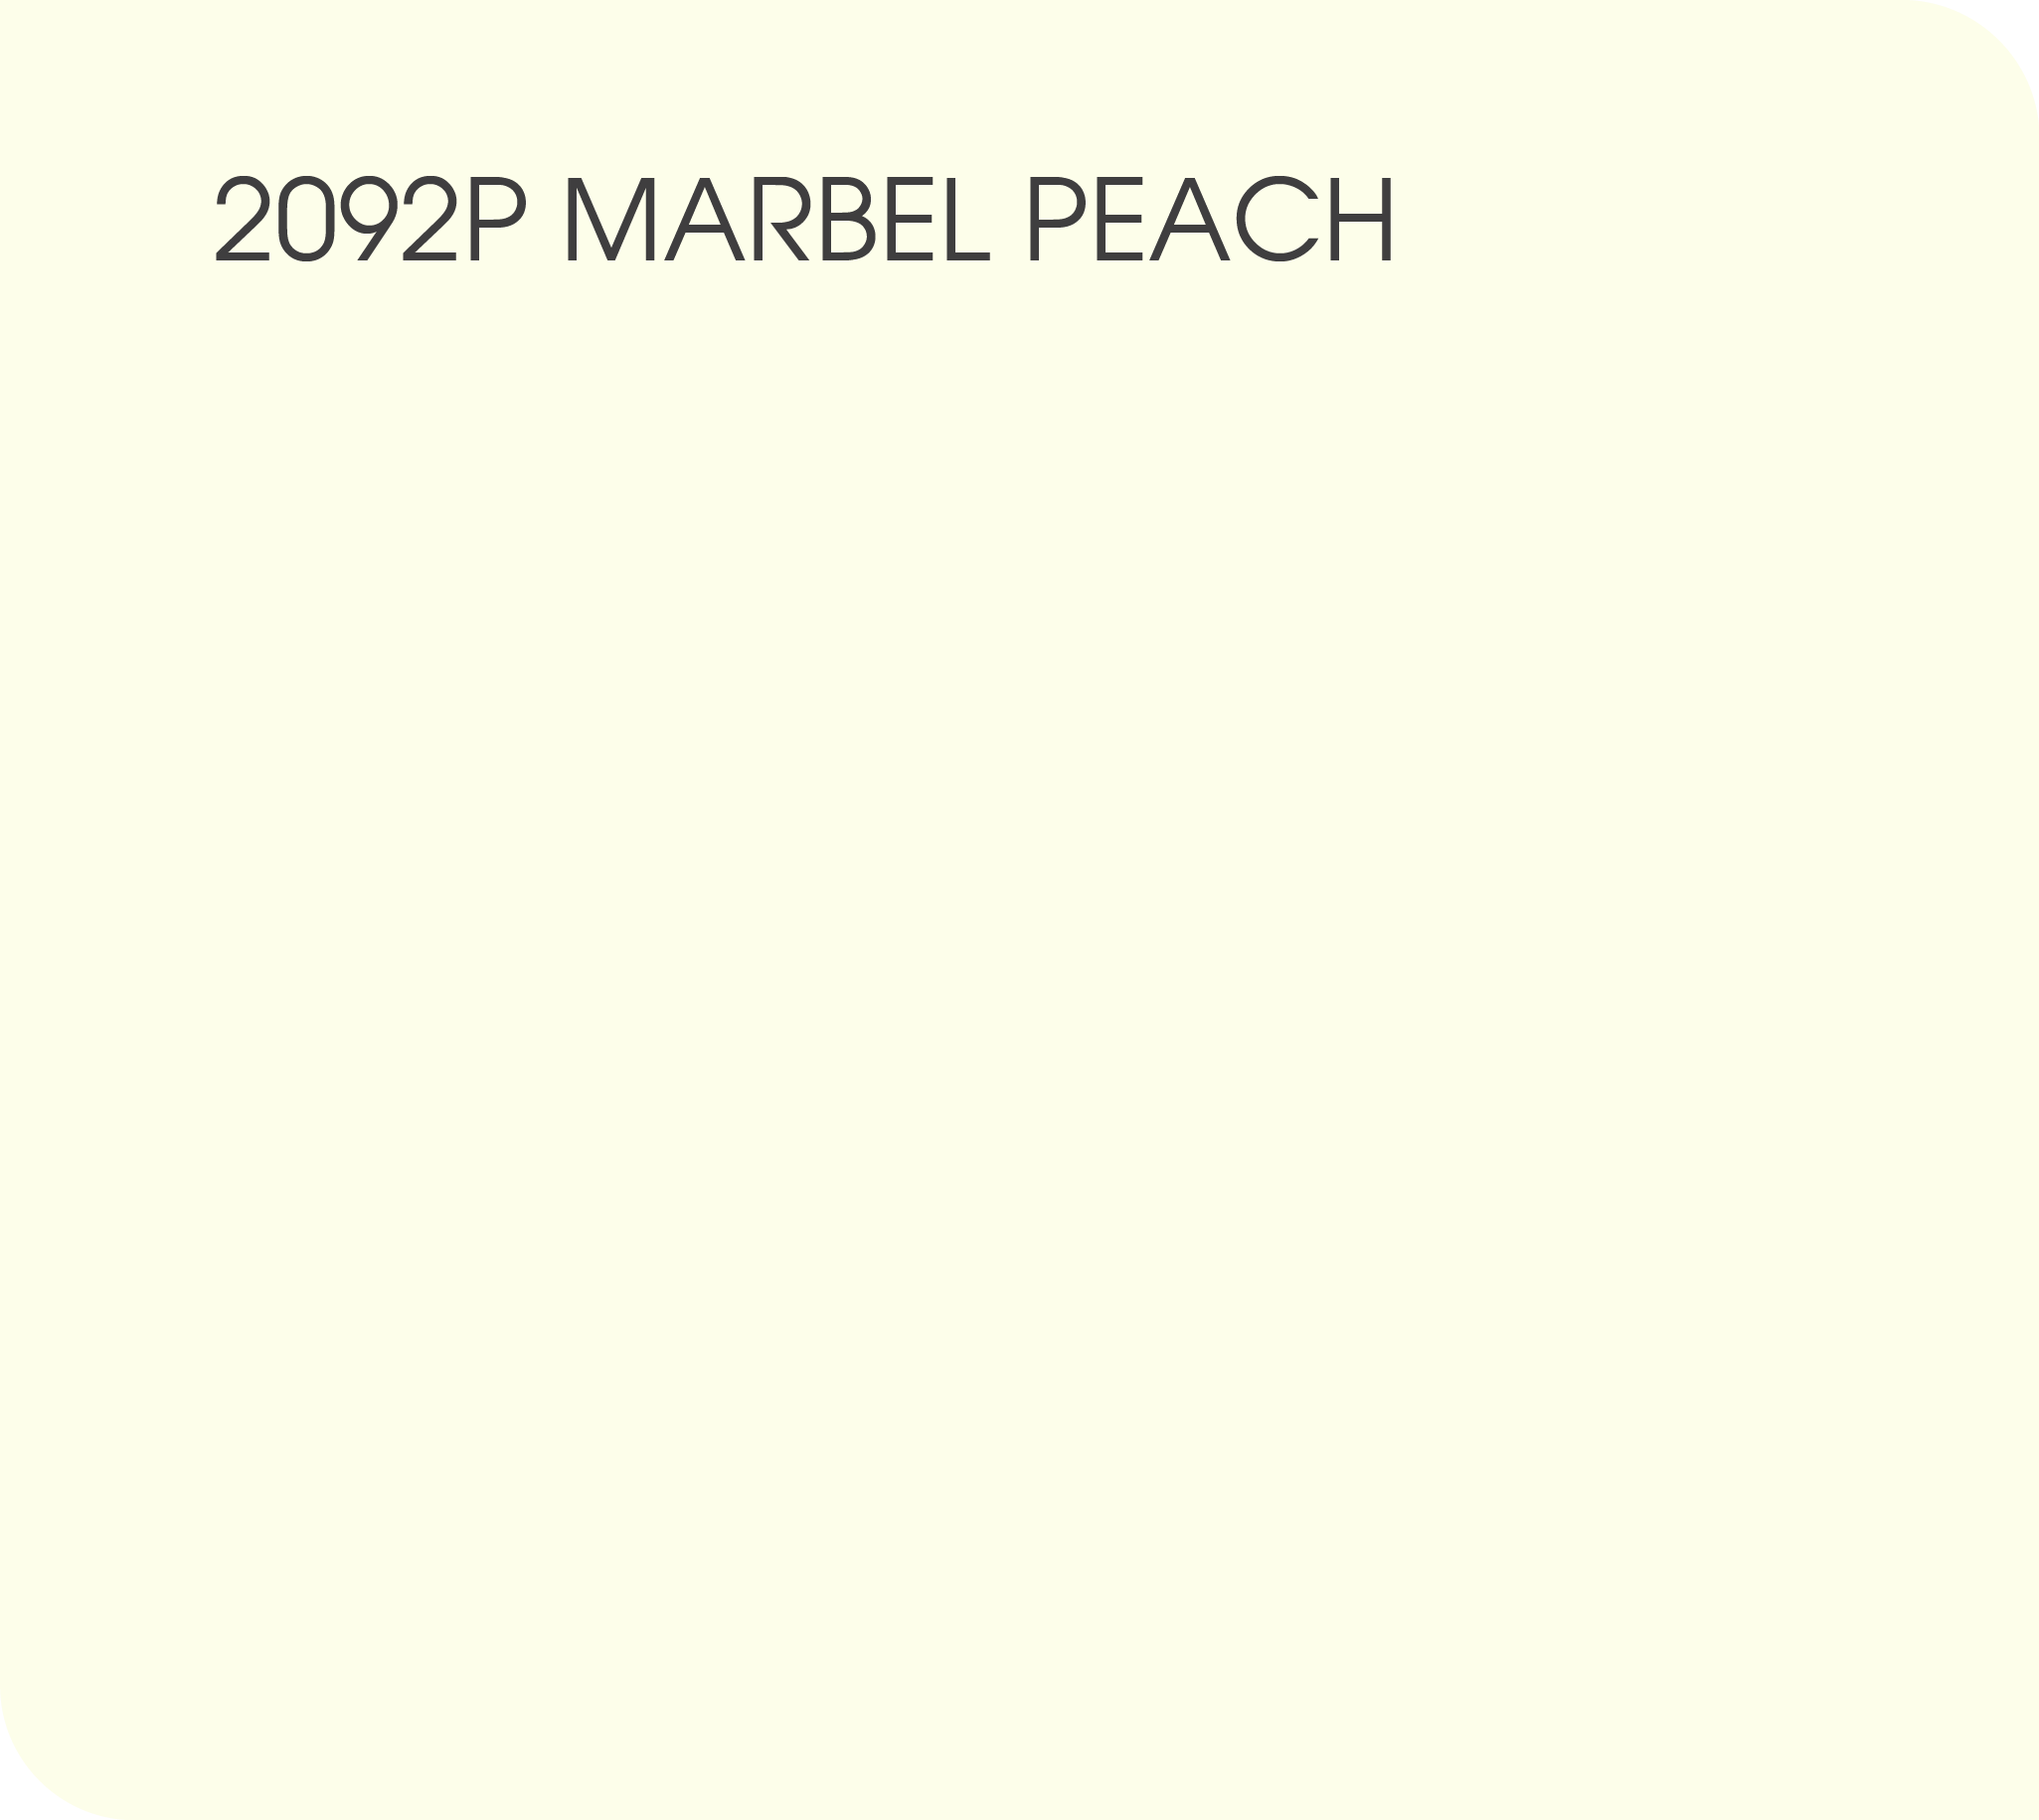 2092P marbel peach